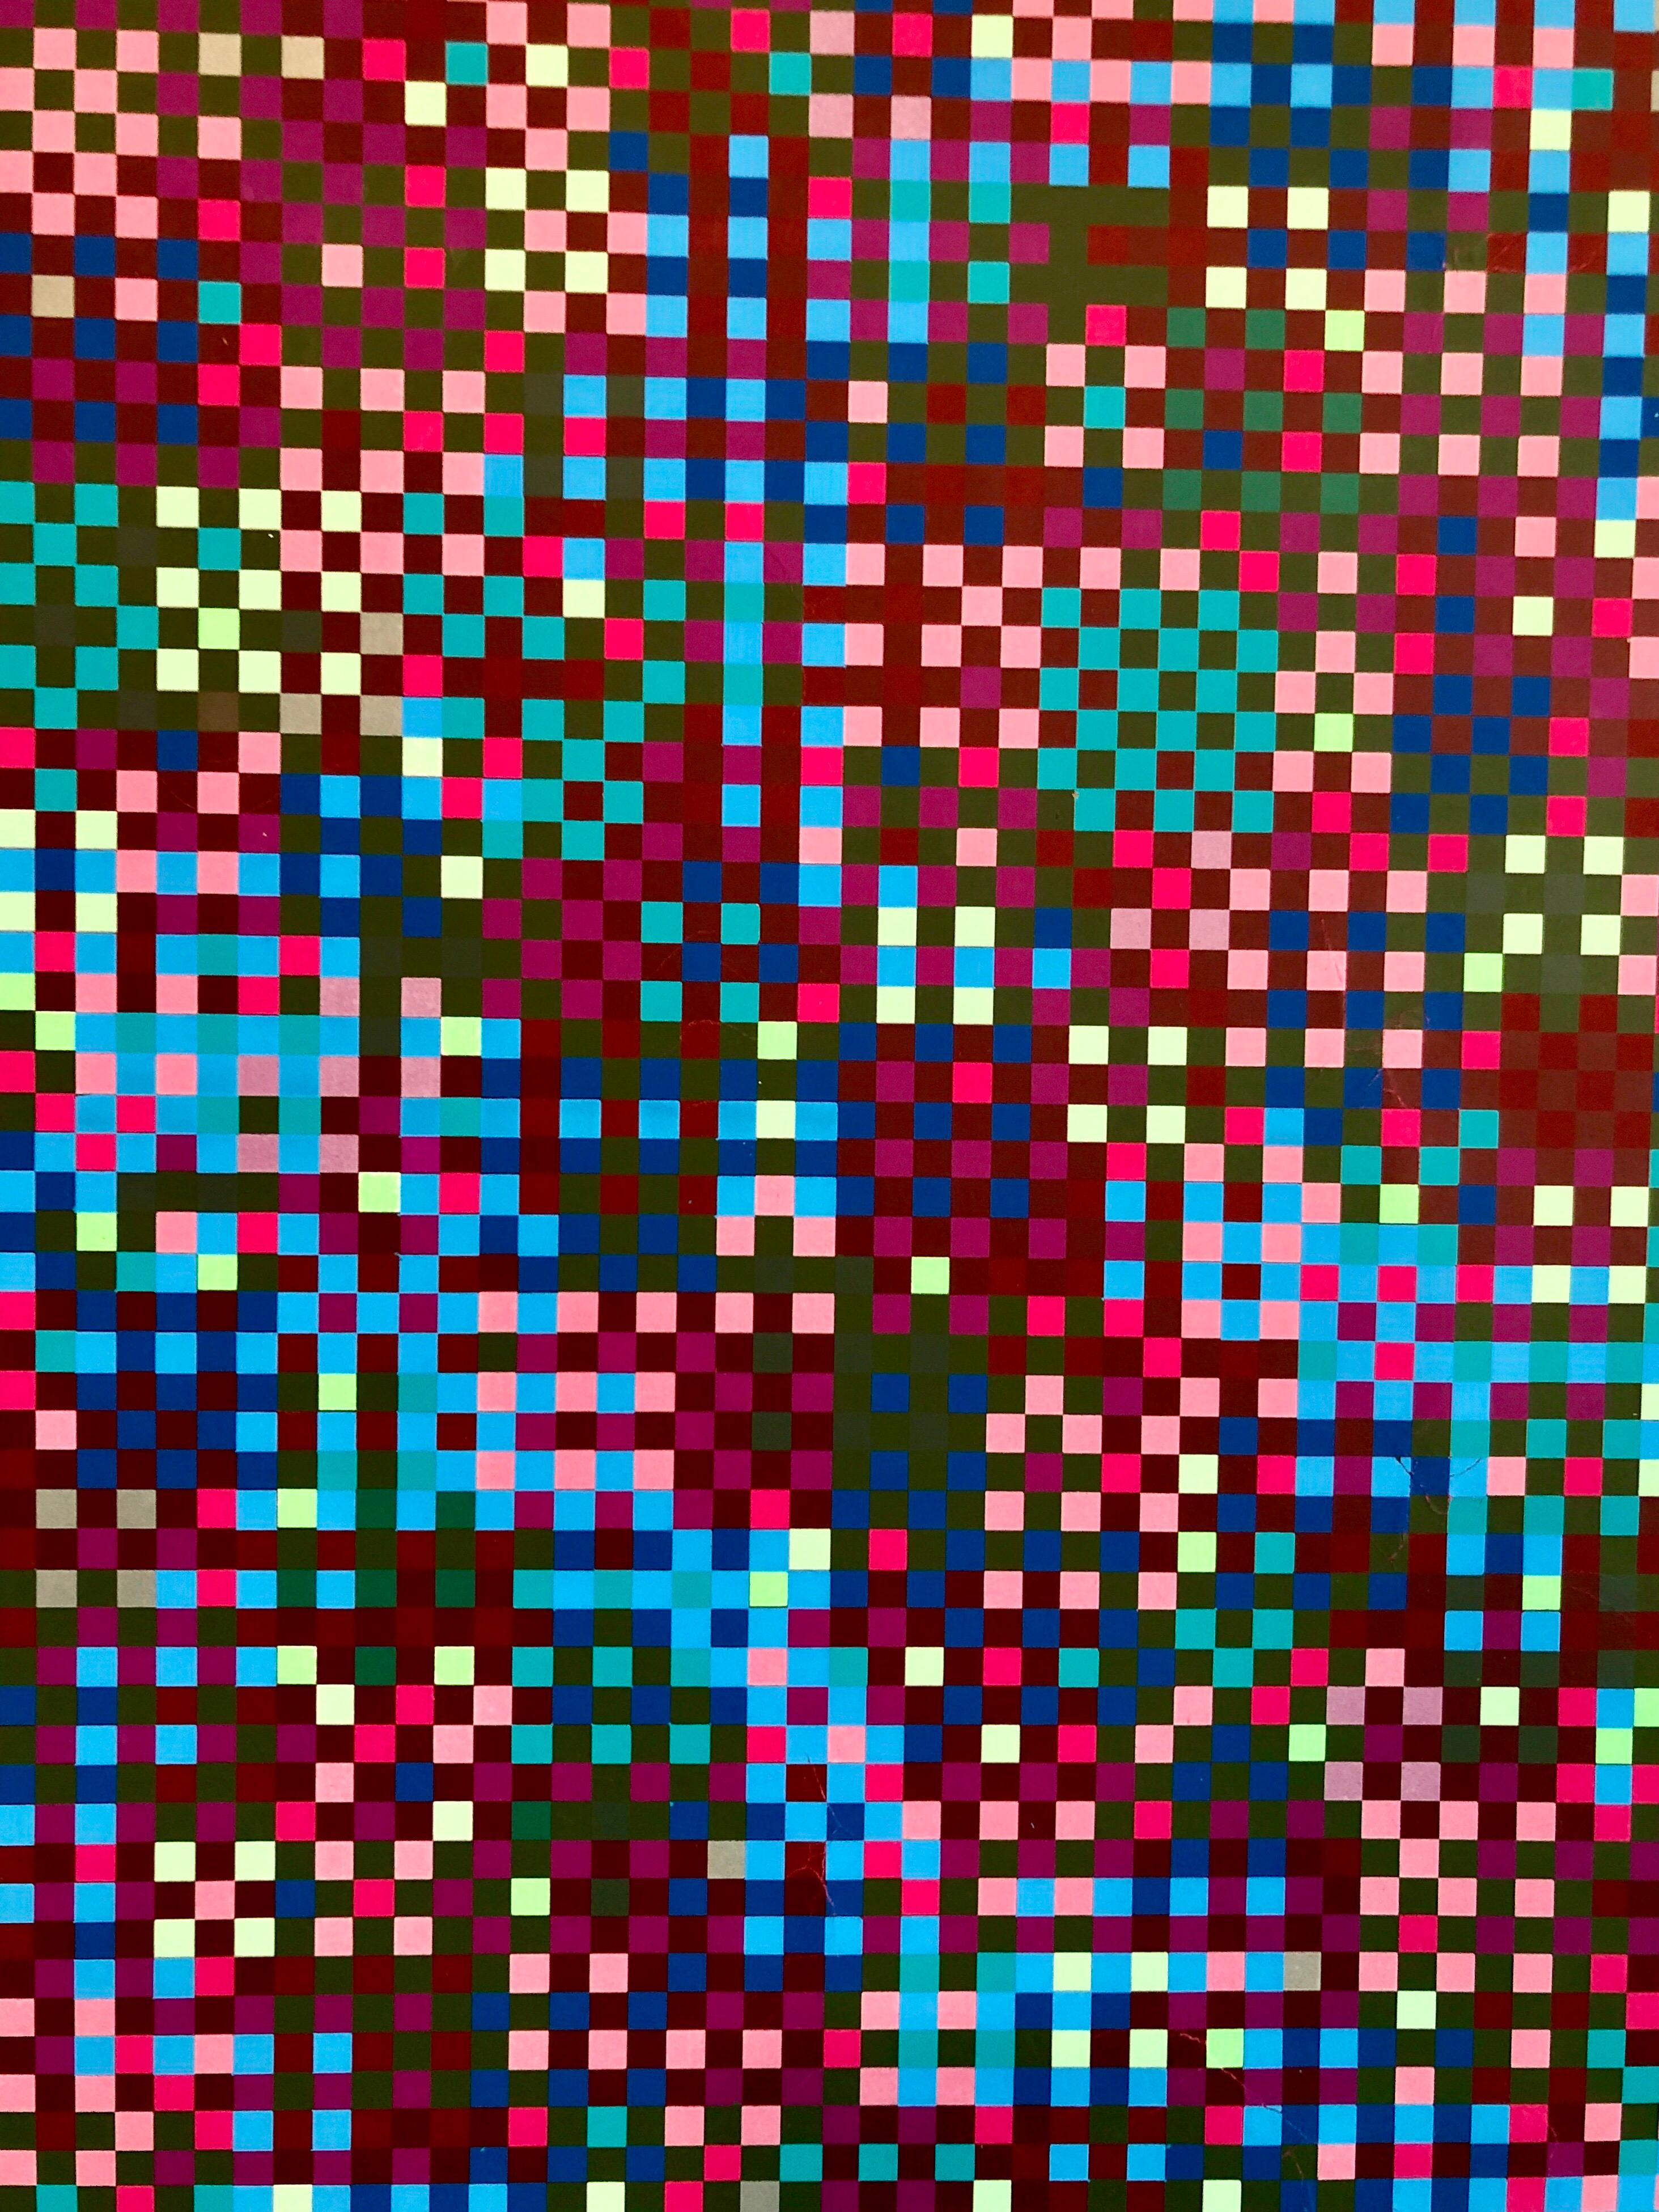 Puerto Rican Abstract Geometric Op Art Silkscreen Lithograph Kinetic Art - Print by Tony Bechara